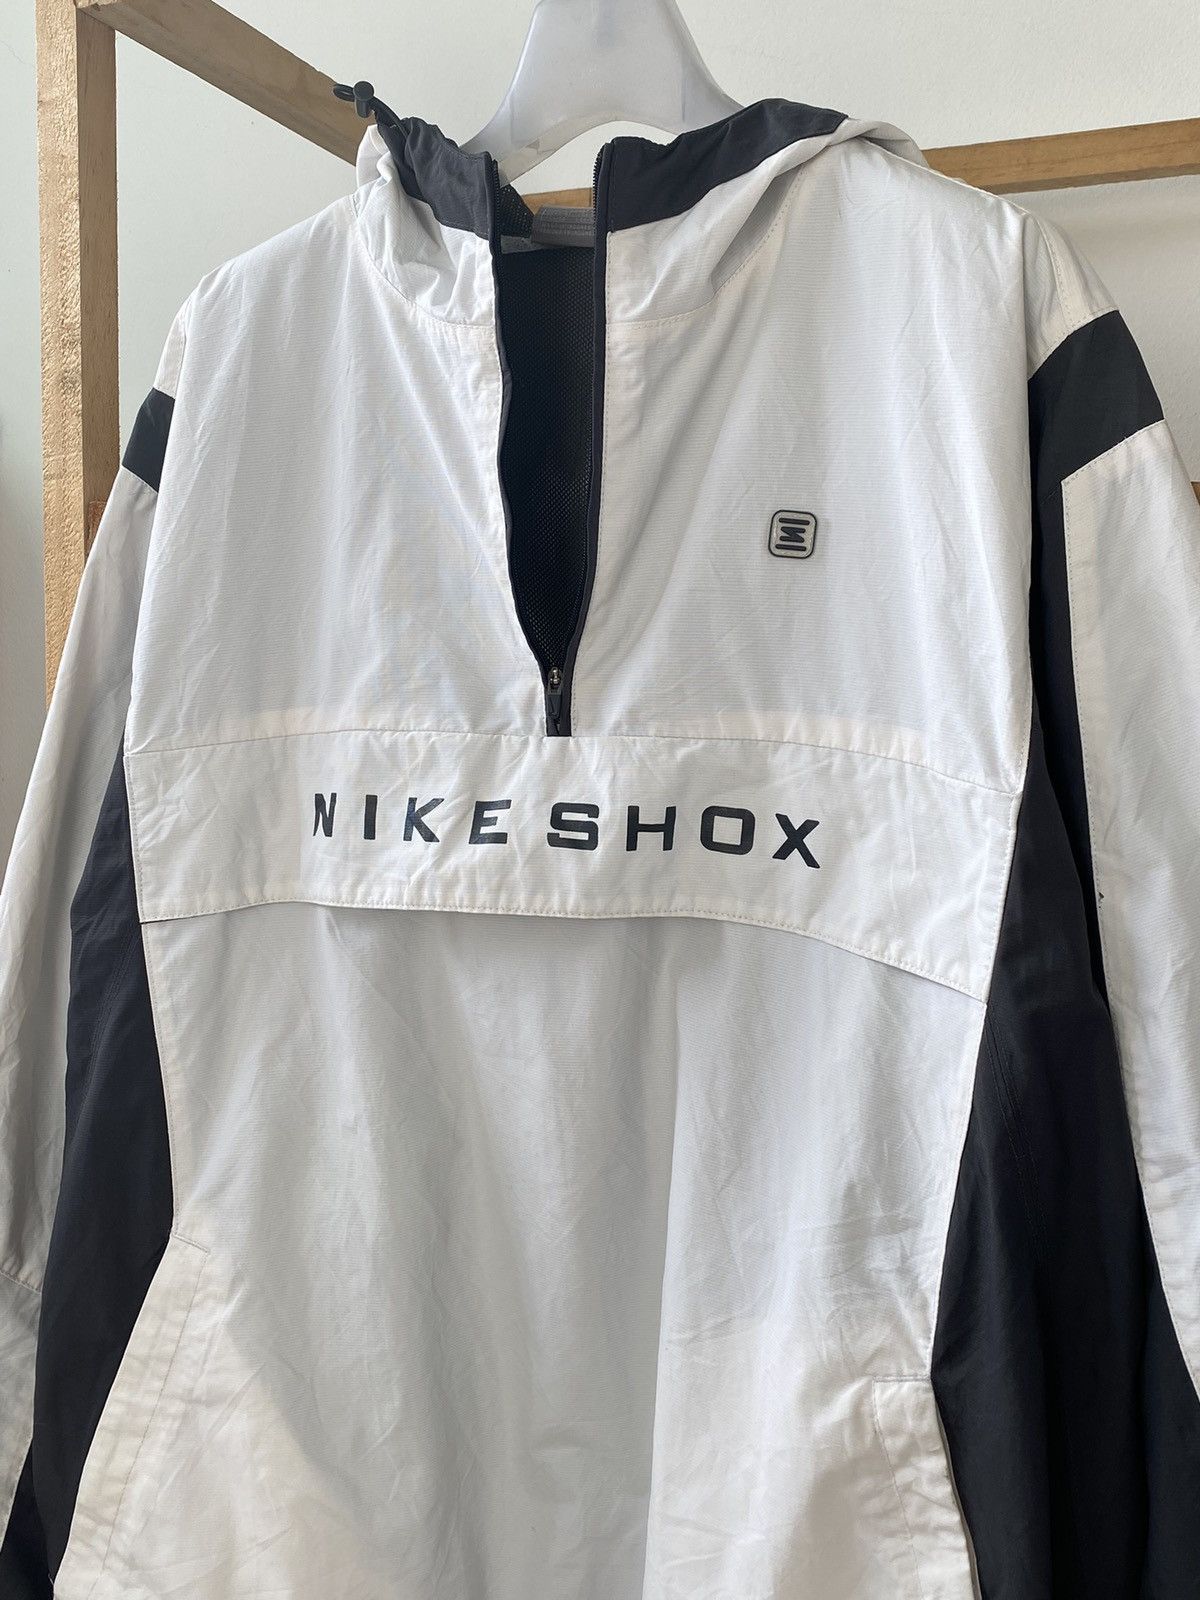 Nike Vintage Nike Shox Anorak Jacket Size US XL / EU 56 / 4 - 5 Thumbnail